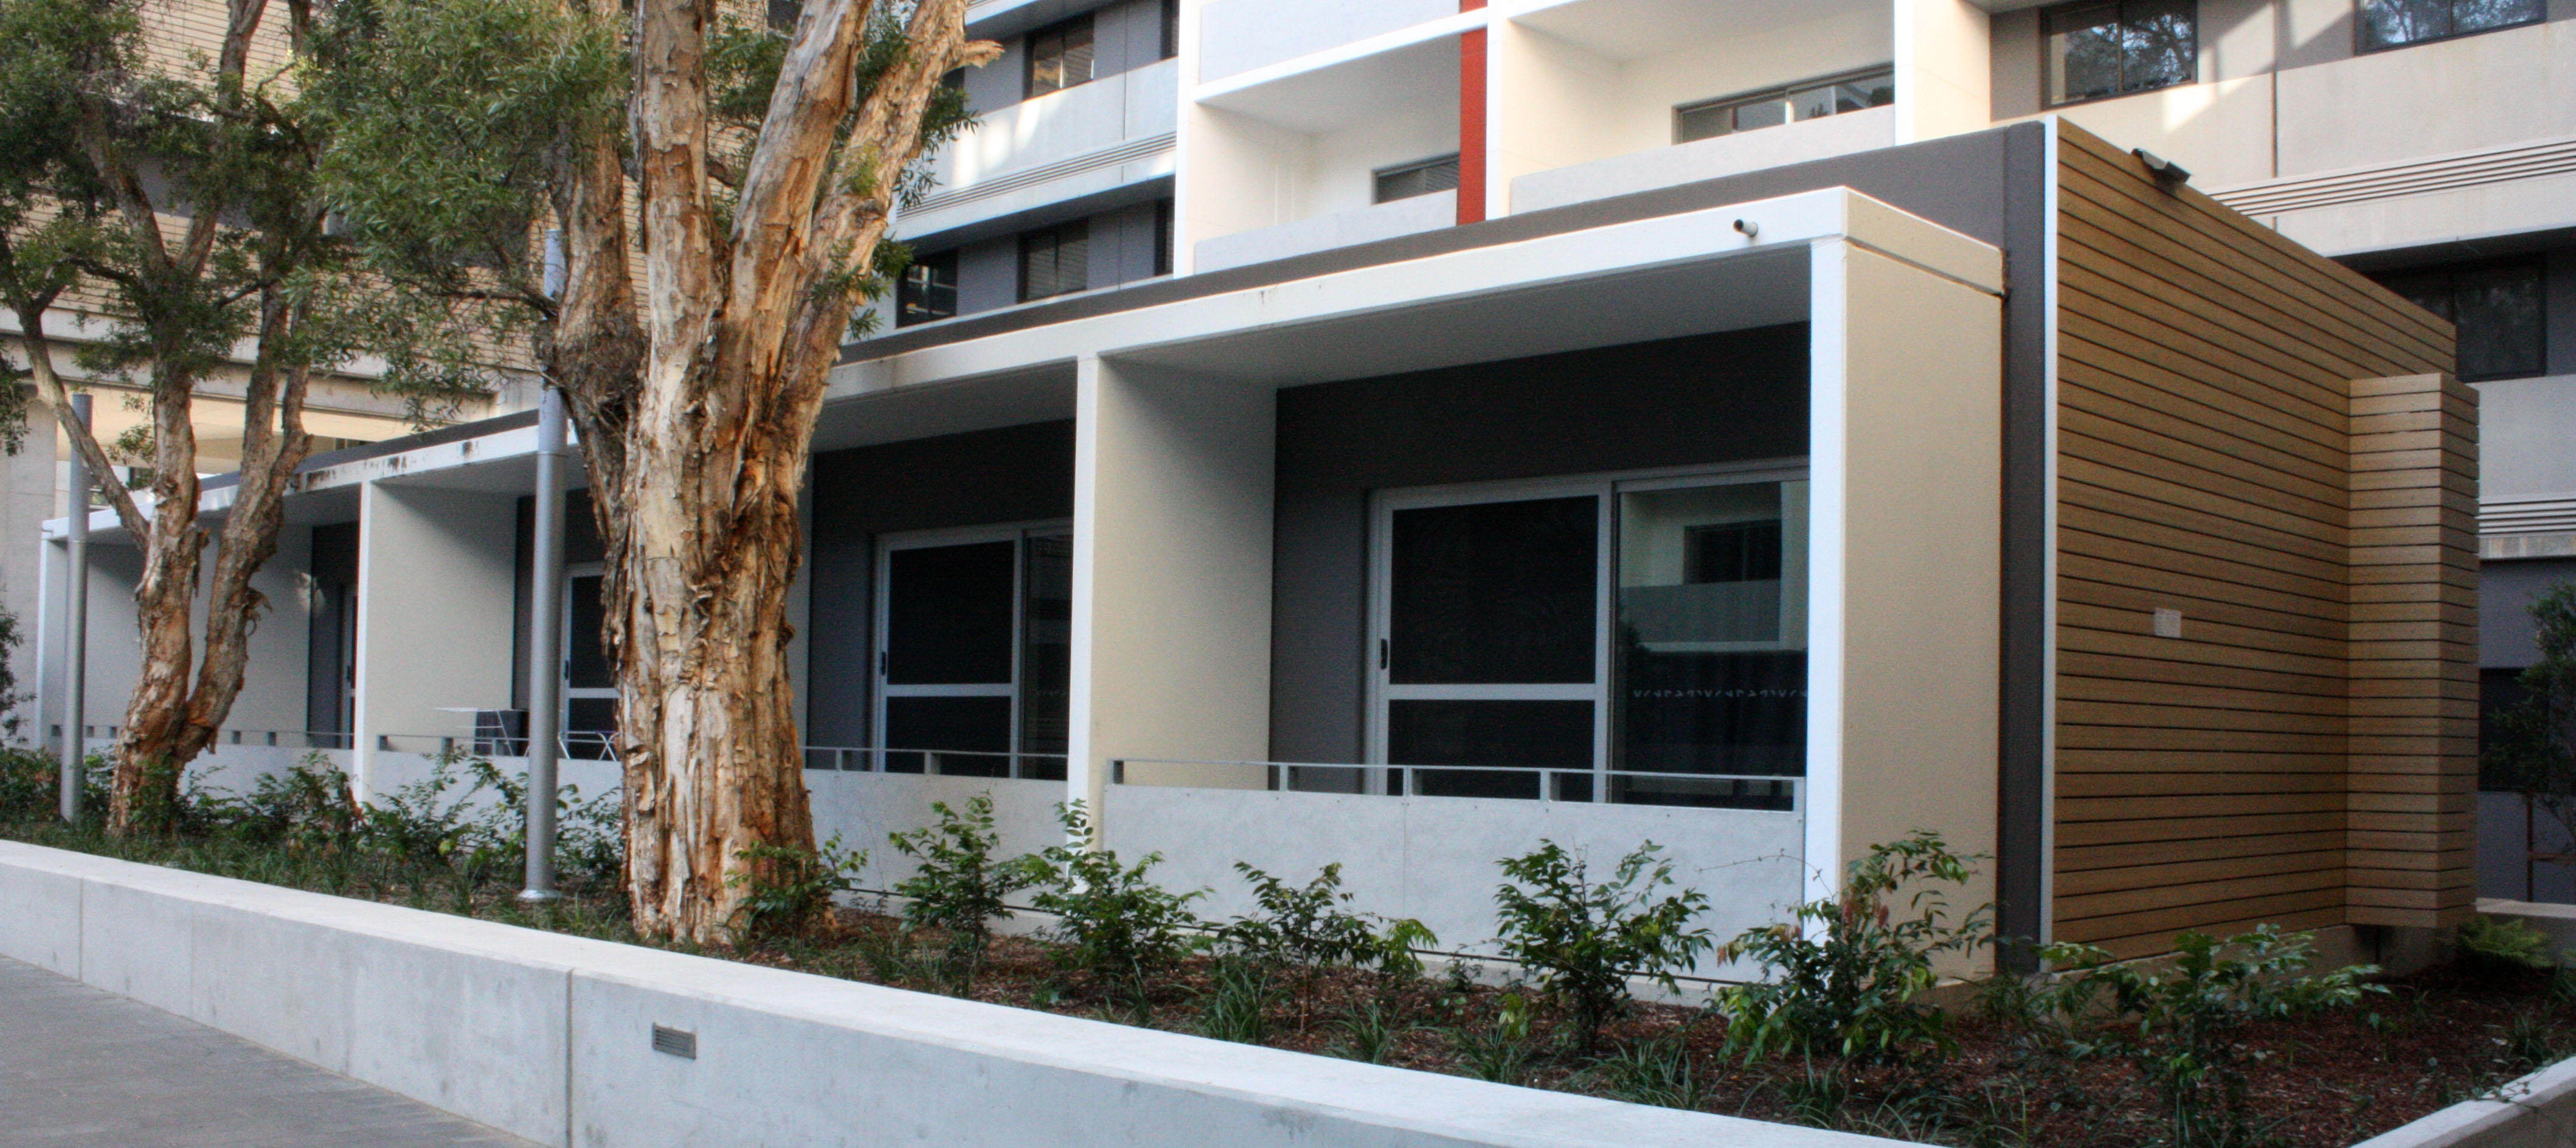 A simple form of veranda located at studio units